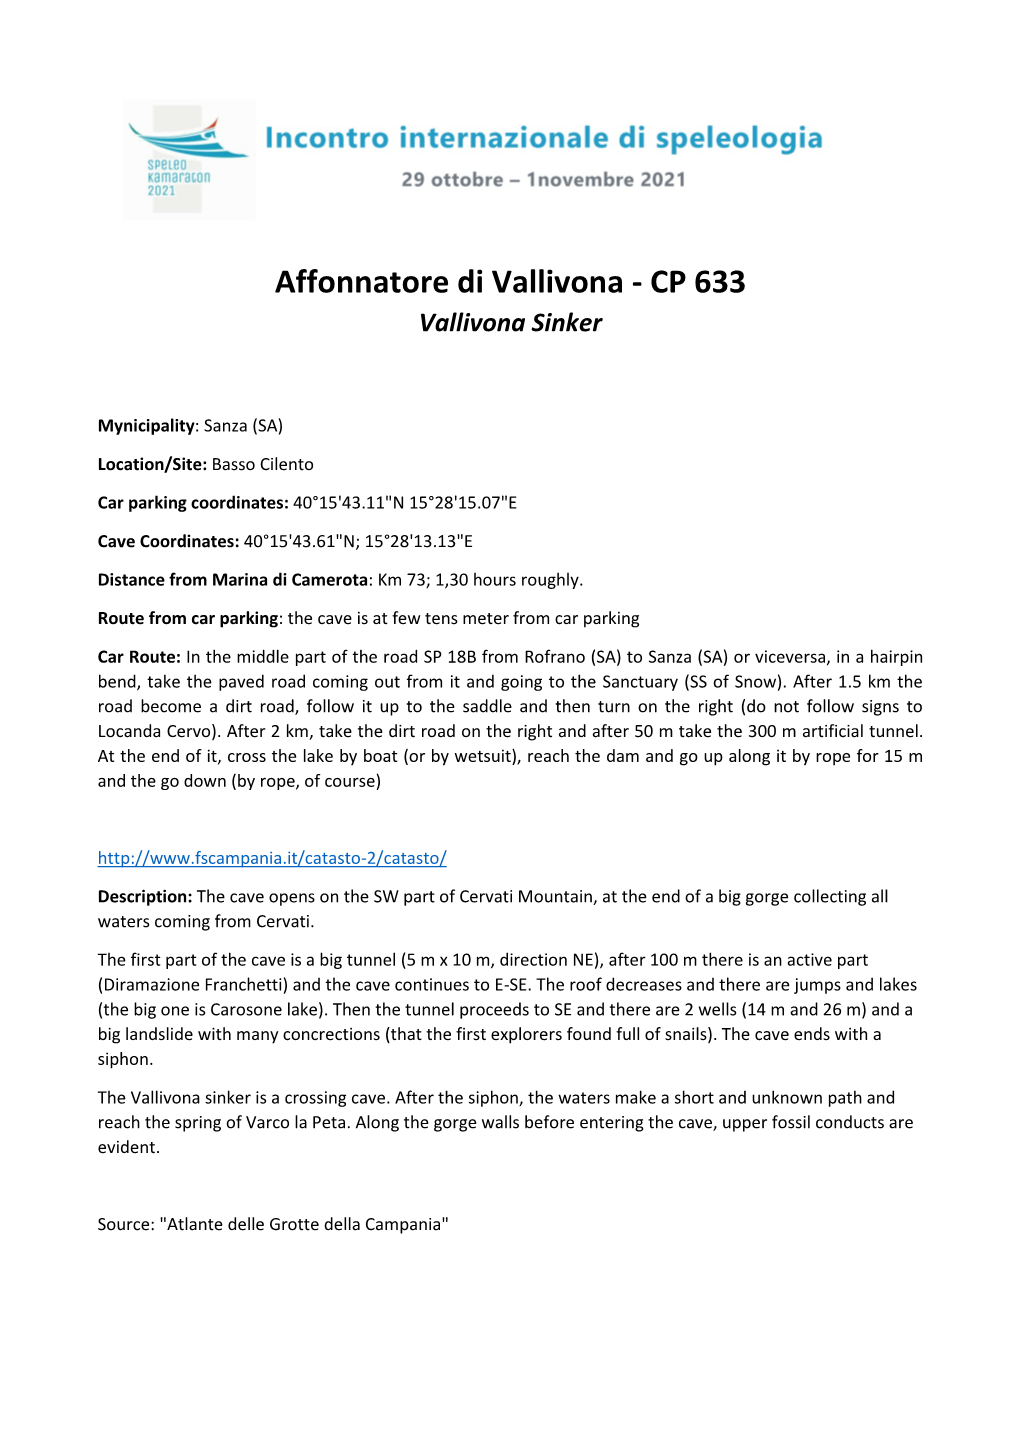 Affonnatore Di Vallivona - CP 633 Vallivona Sinker